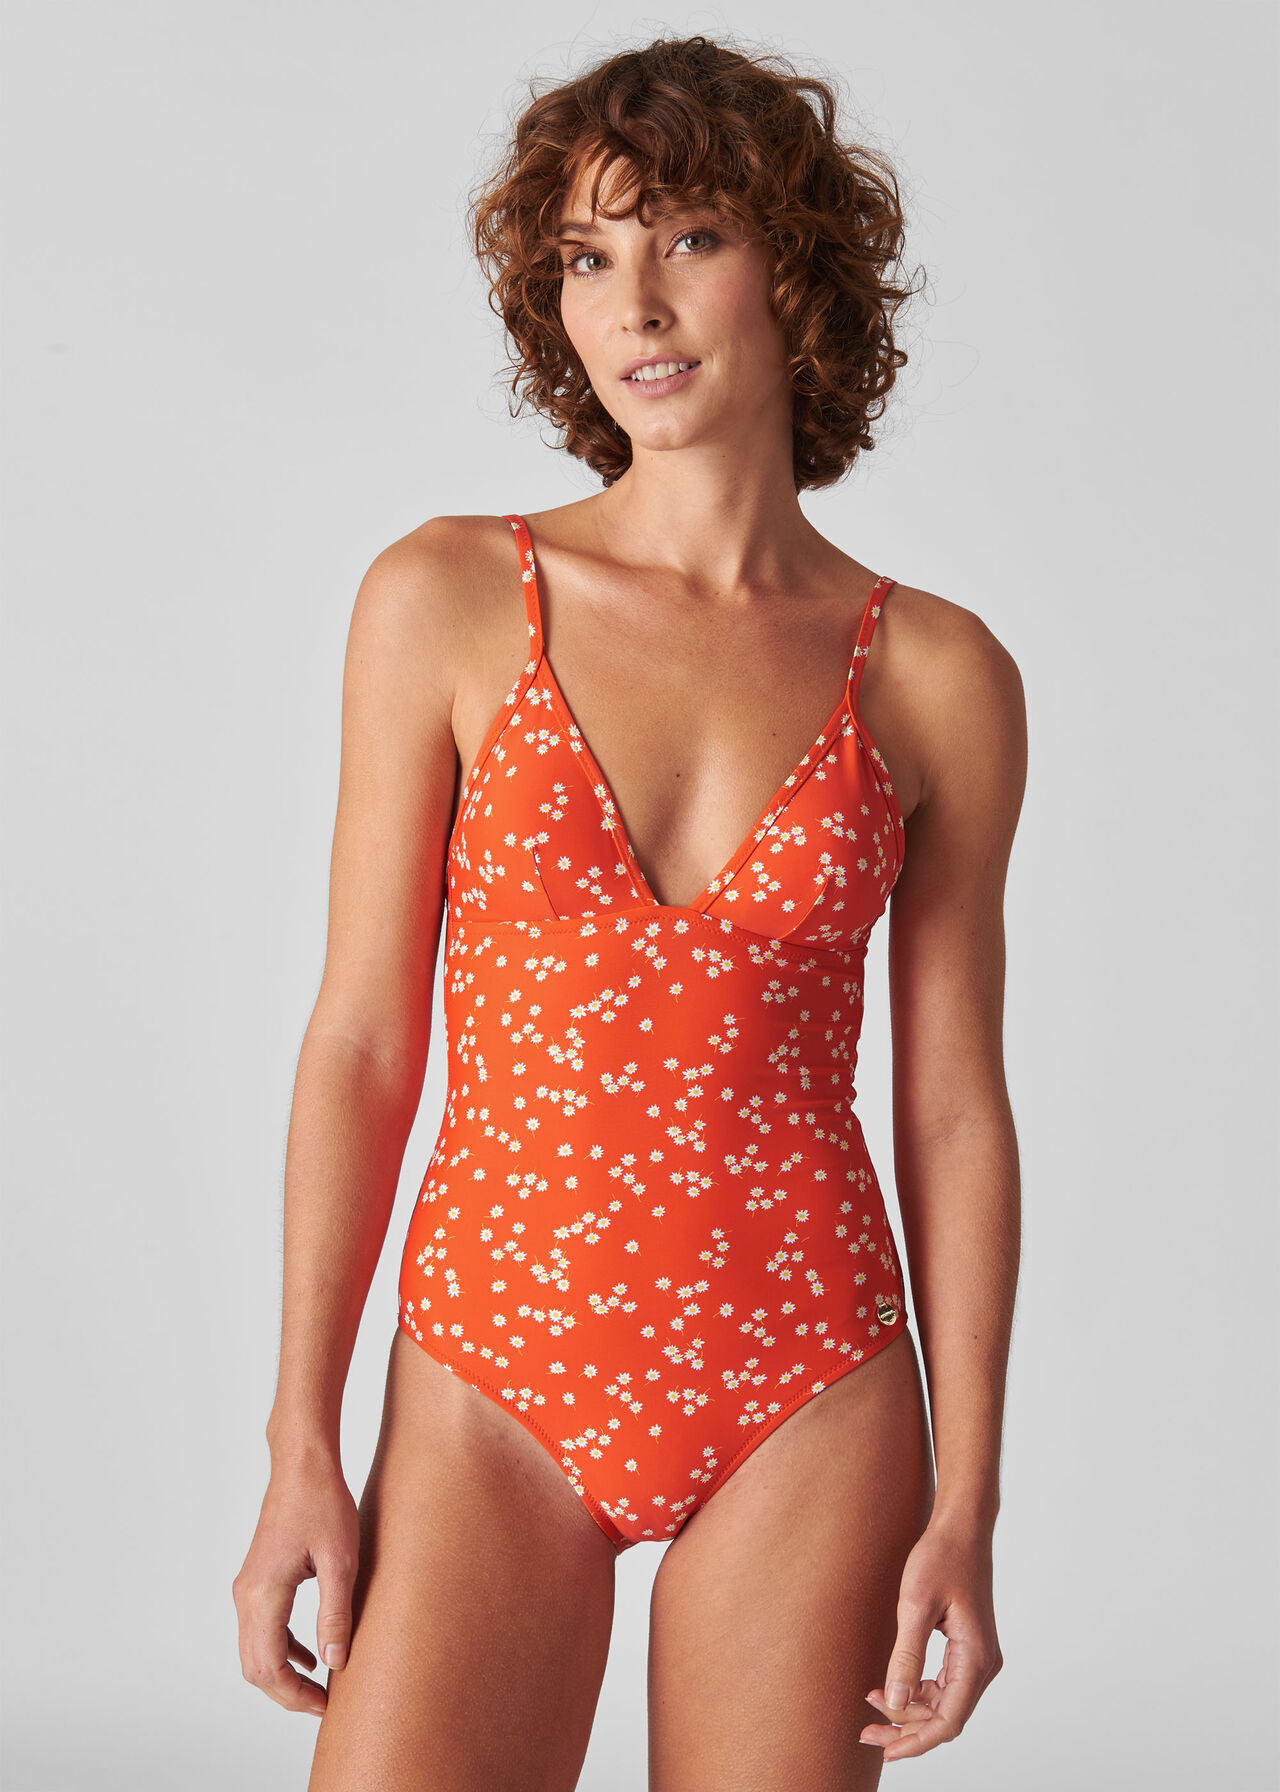 Daisy Print Swimsuit Red/Multi